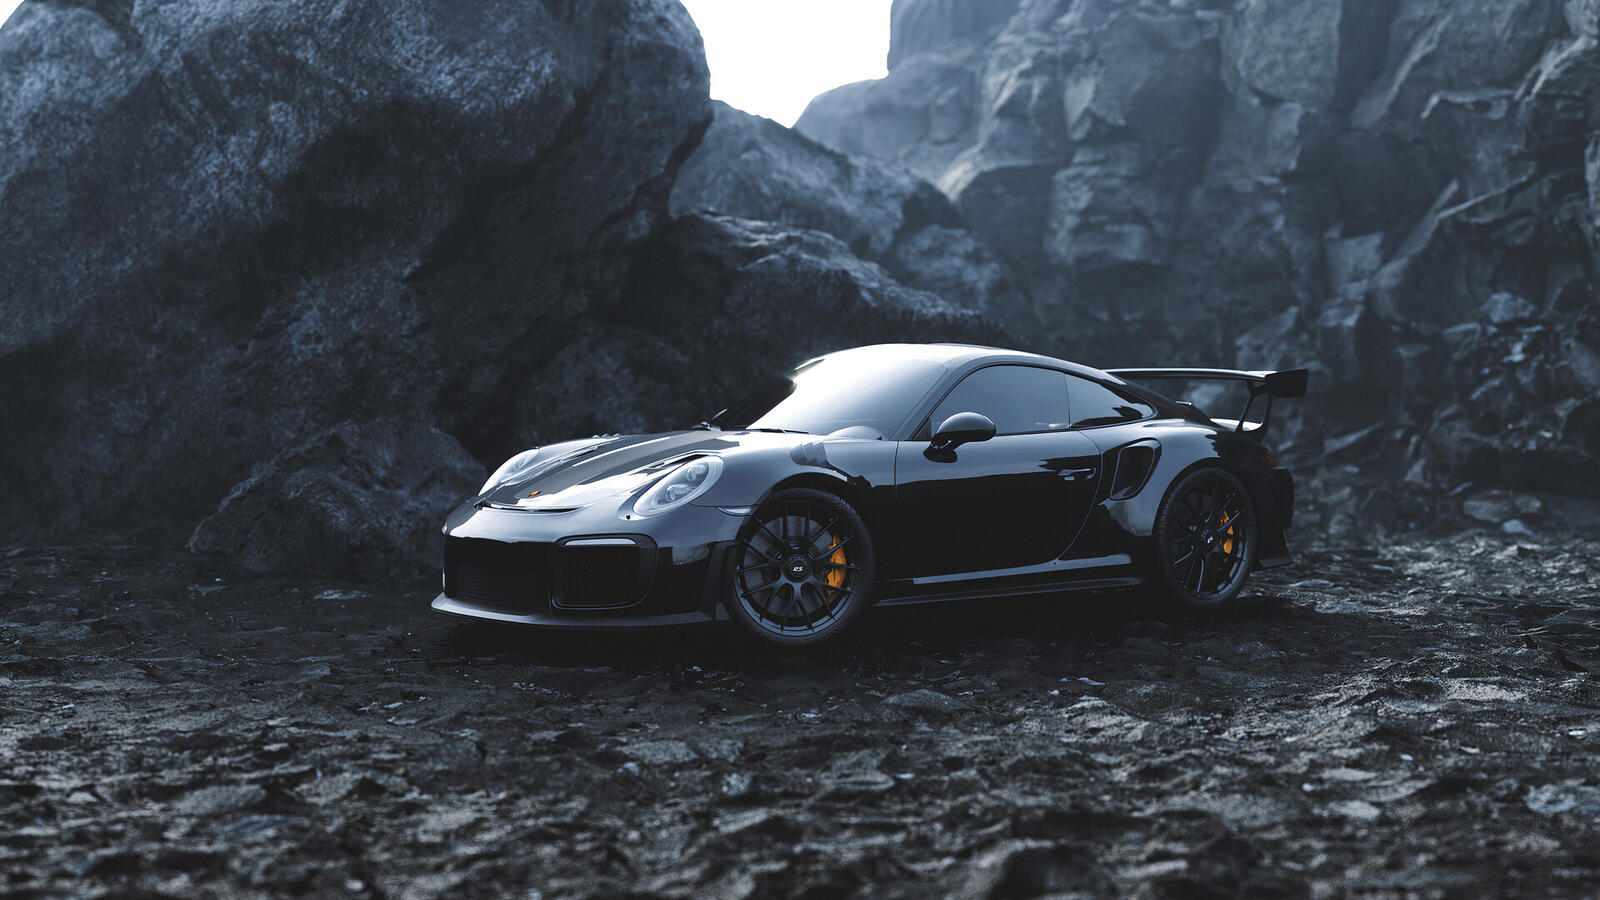 Free photo Black Porsche against a backdrop of rocks